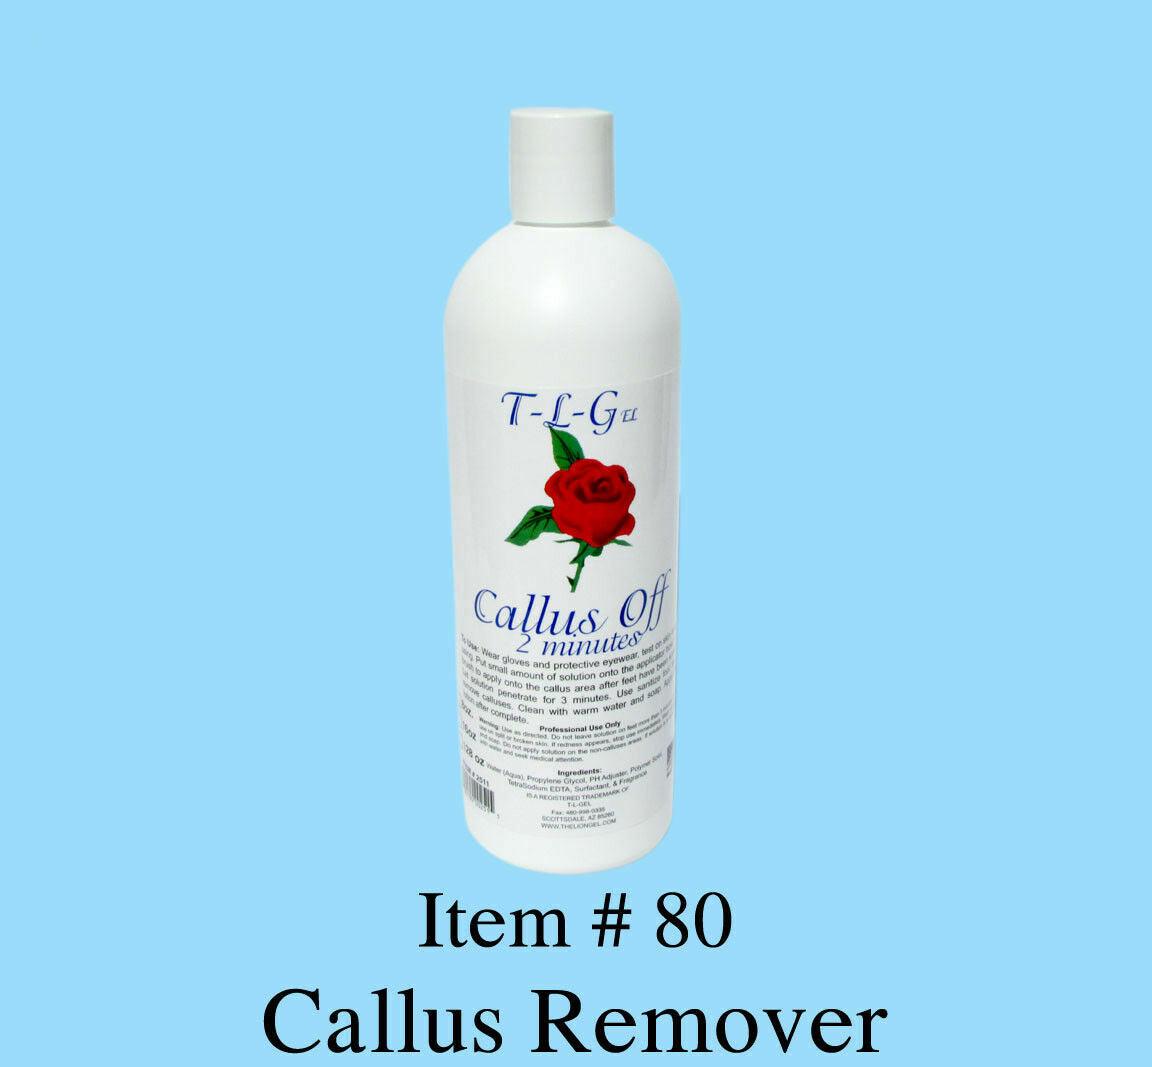 T-L-Gel Callus Off 2 Minutes - Callus remover 8 oz